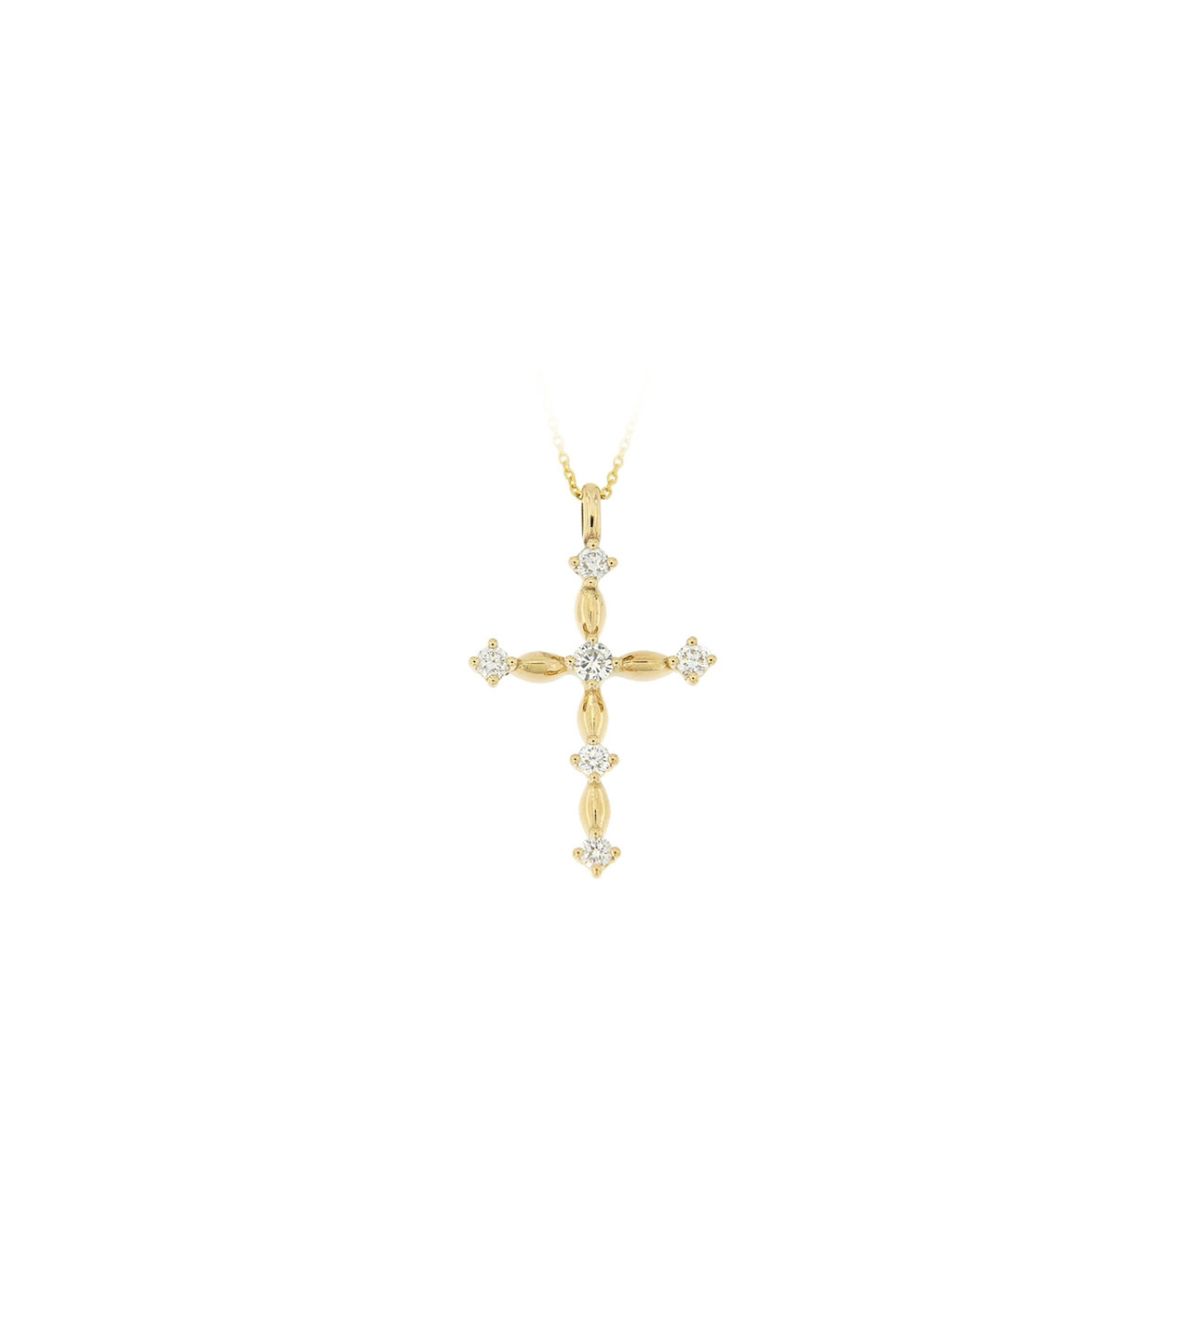 Yello Gold Cross with Diamonds 03178